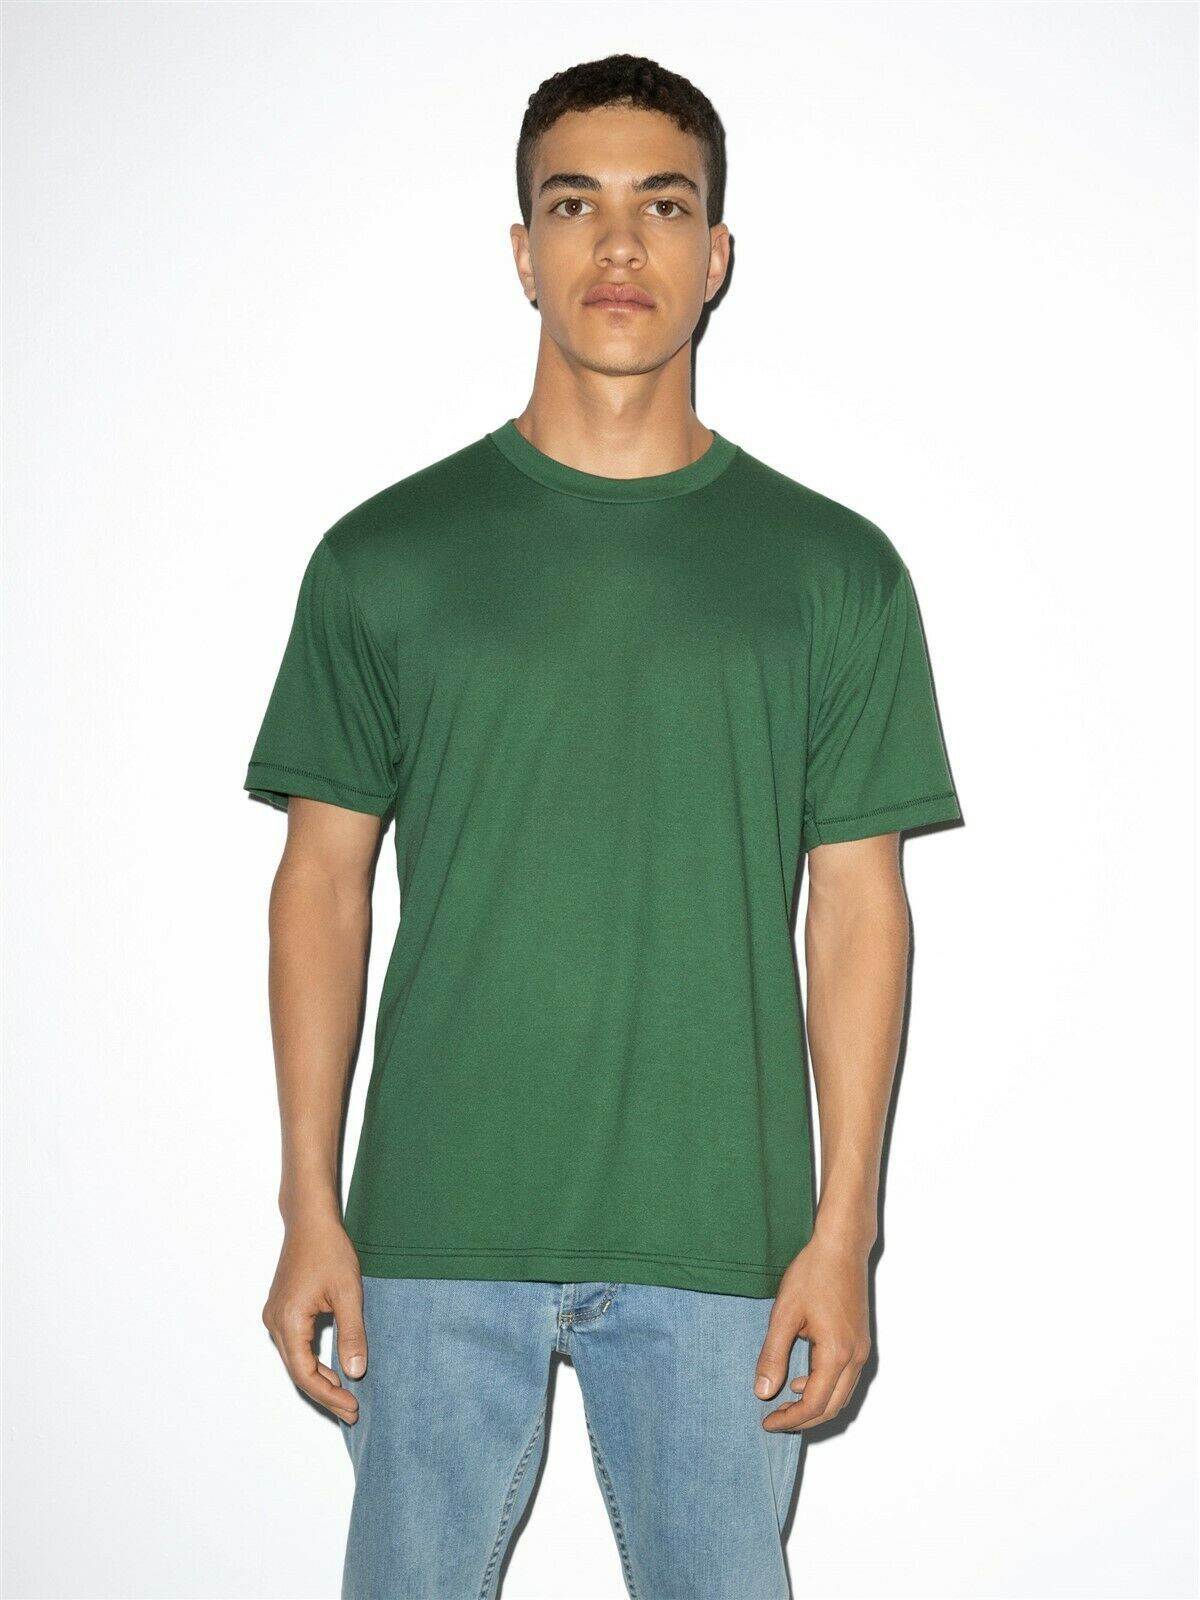 American Apparel Plain Short Sleeve T-Shirt XL Bottle Green NEW BB401W